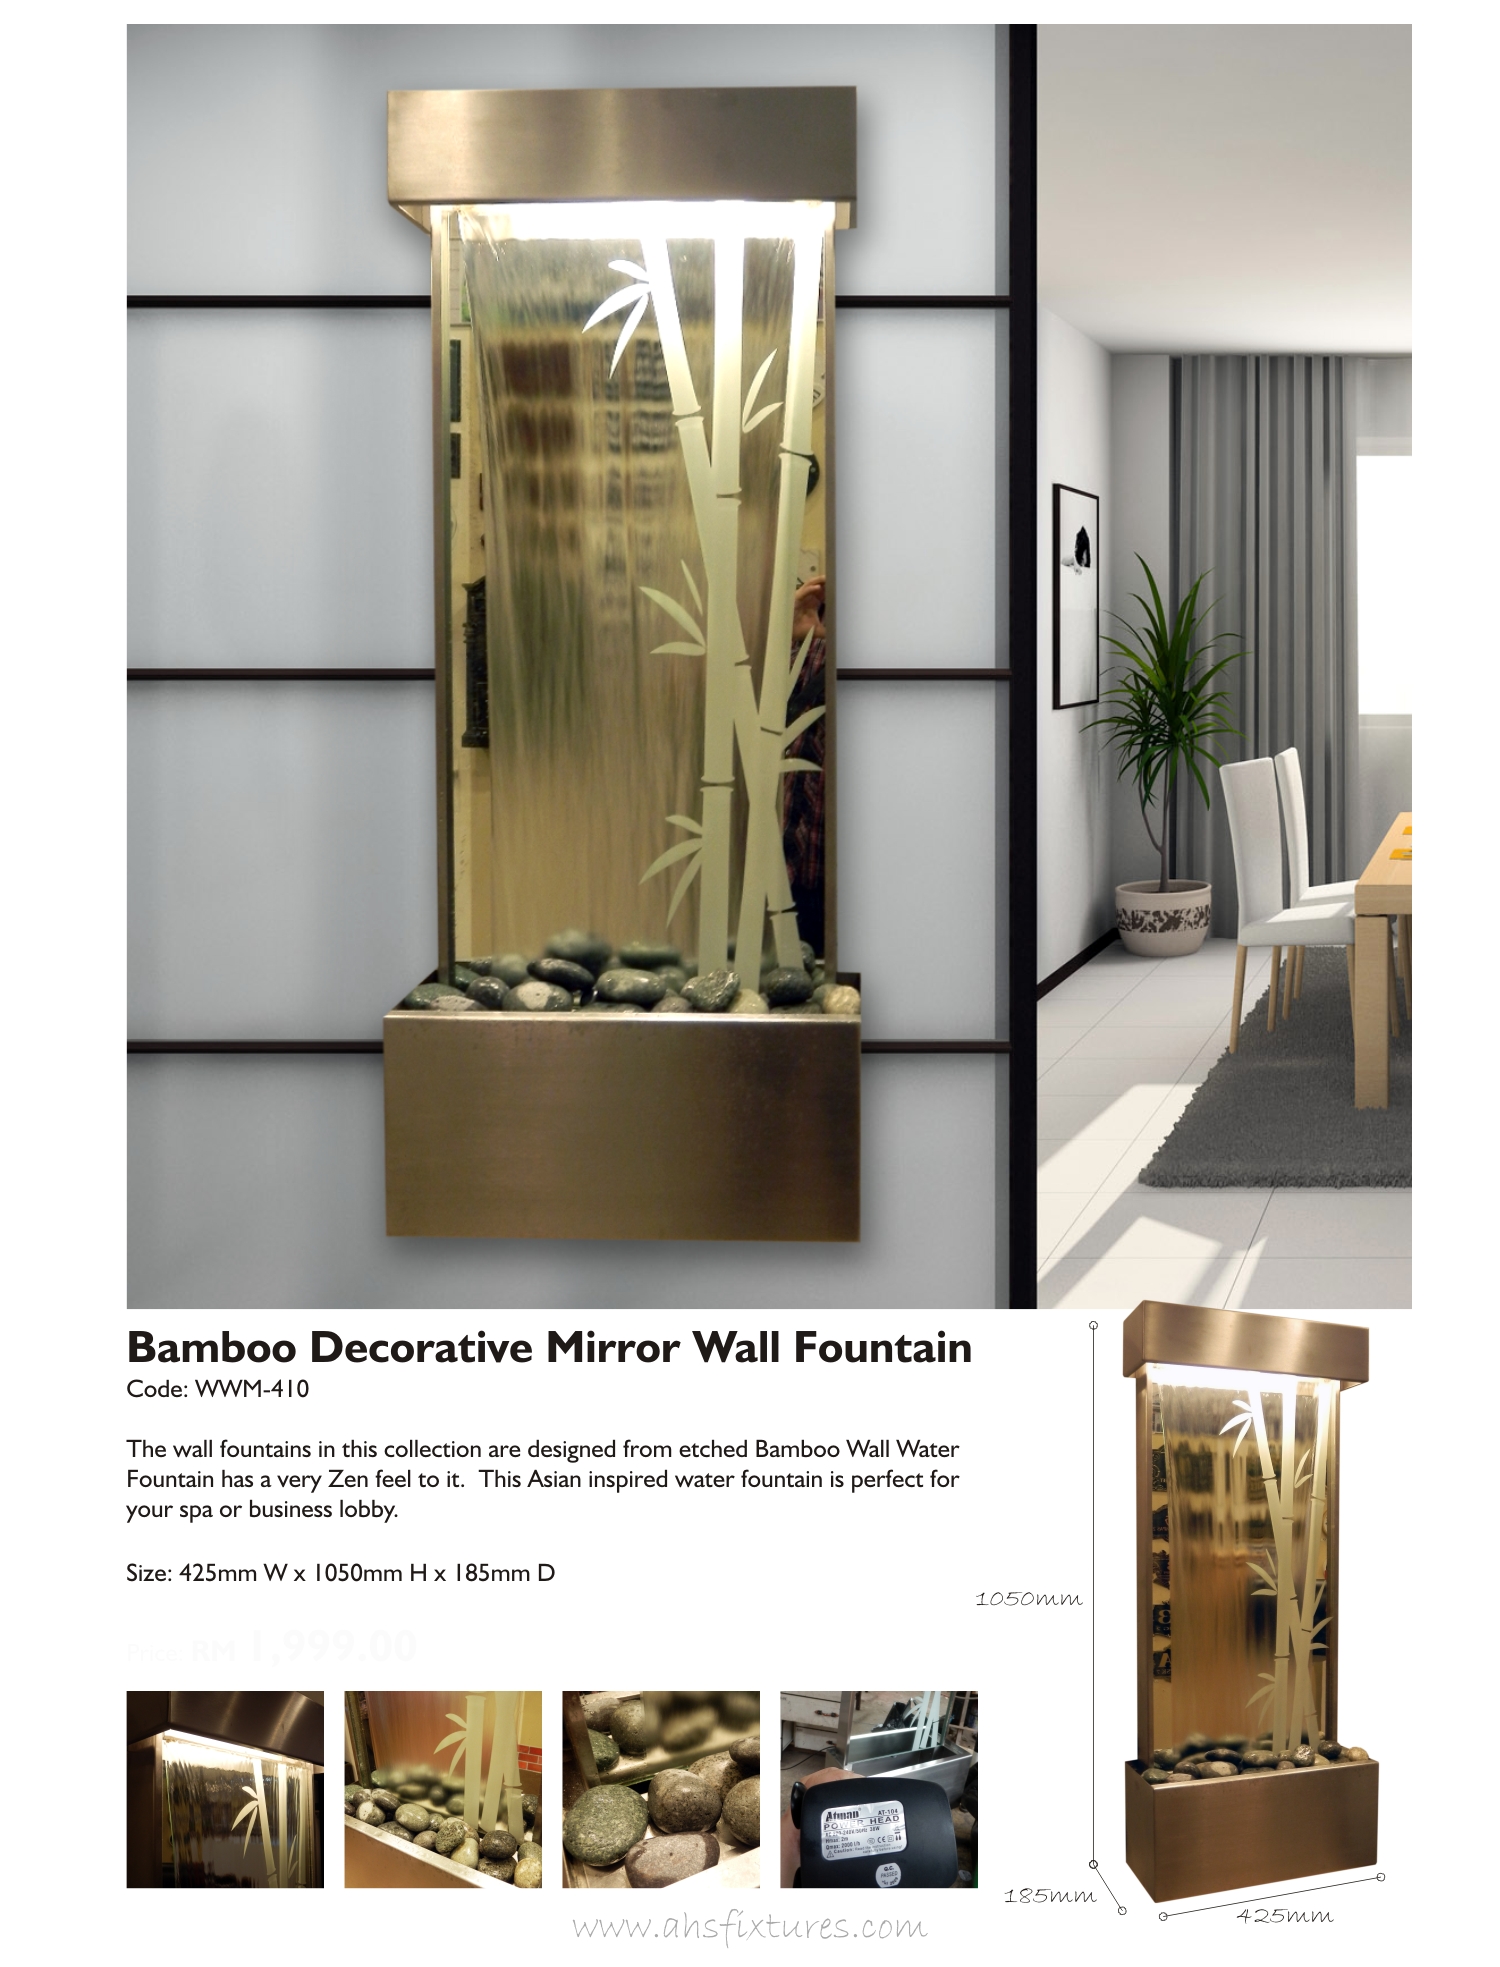 WWM-410 Bamboo Decorative Mirror Wall Fountain